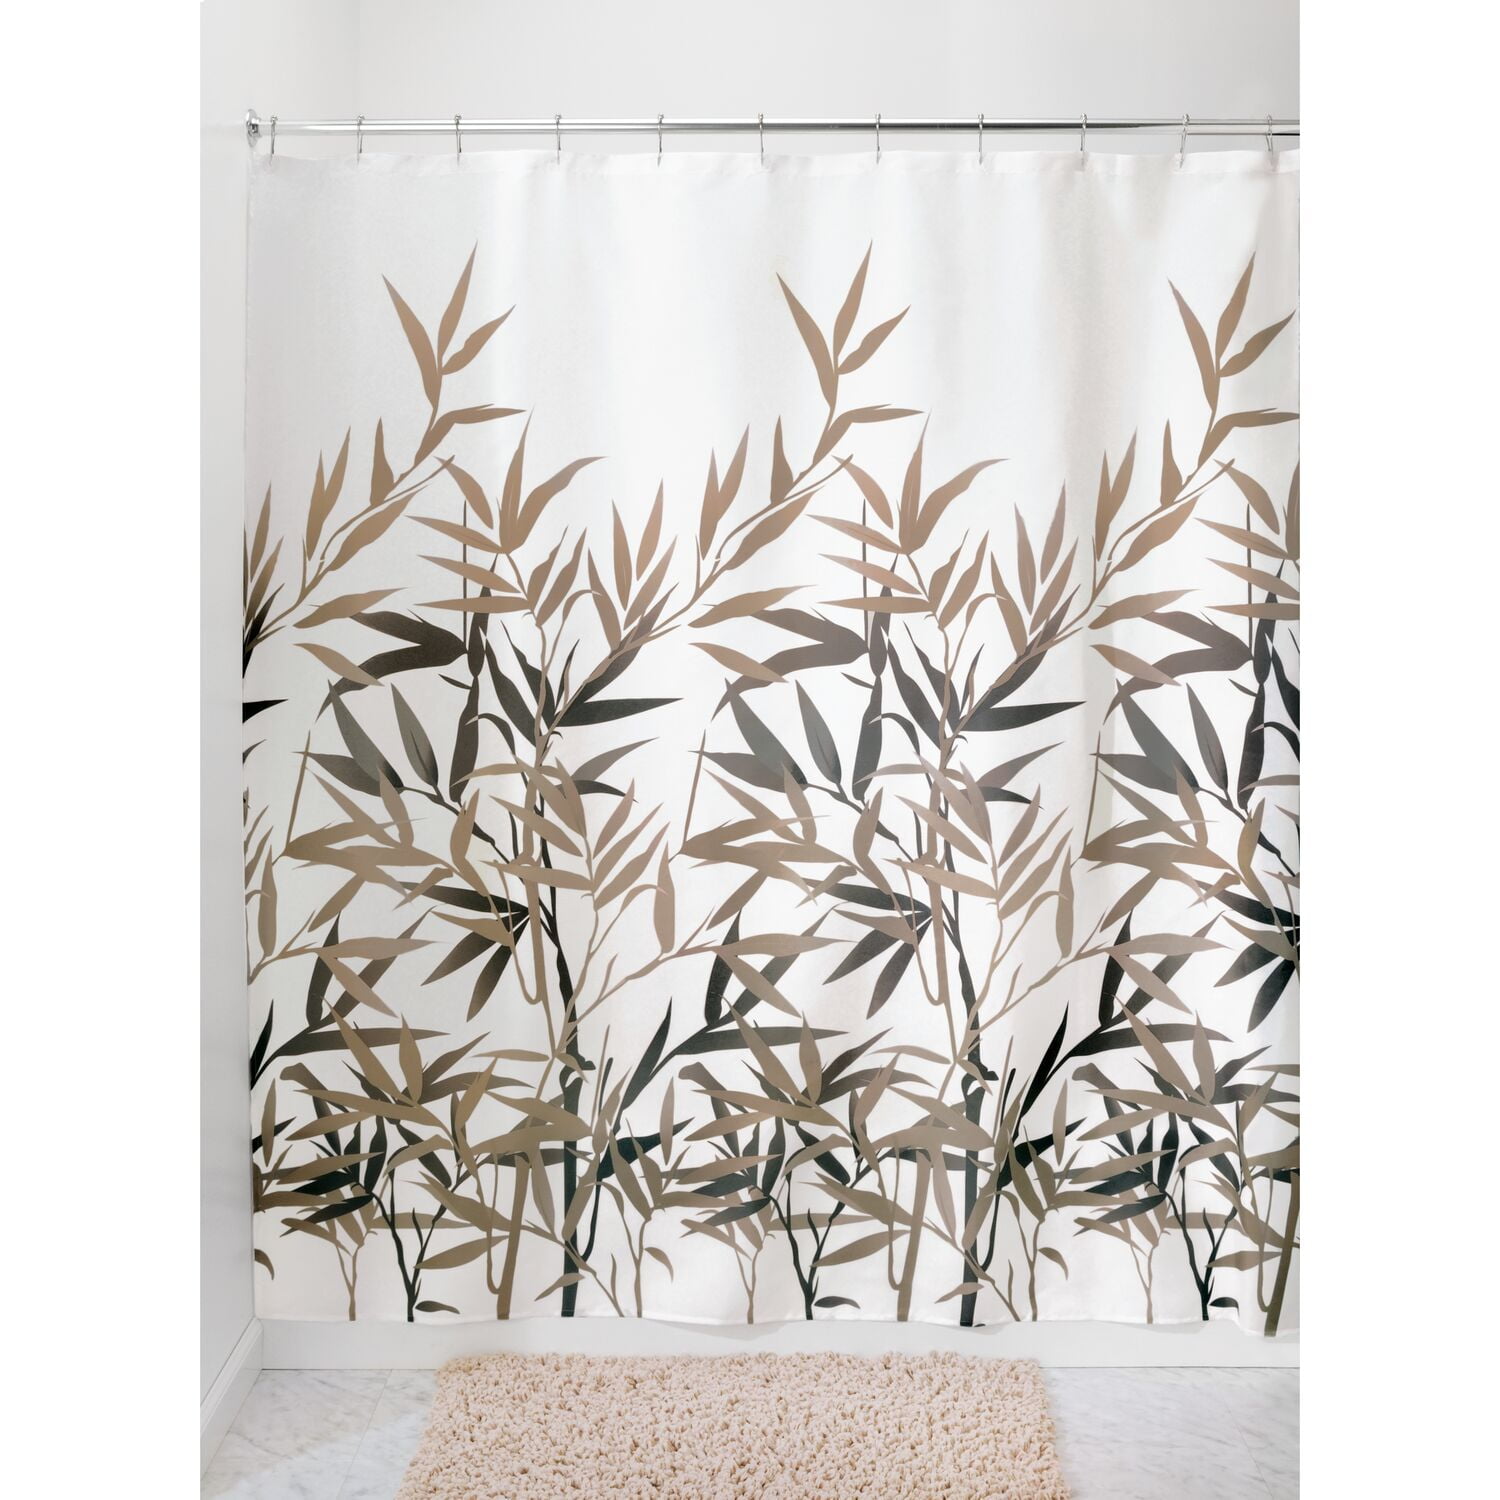 72" x 72" InterDesign 36527 Leafy Bamboo Printed Anzu Fabric Shower Curtain 